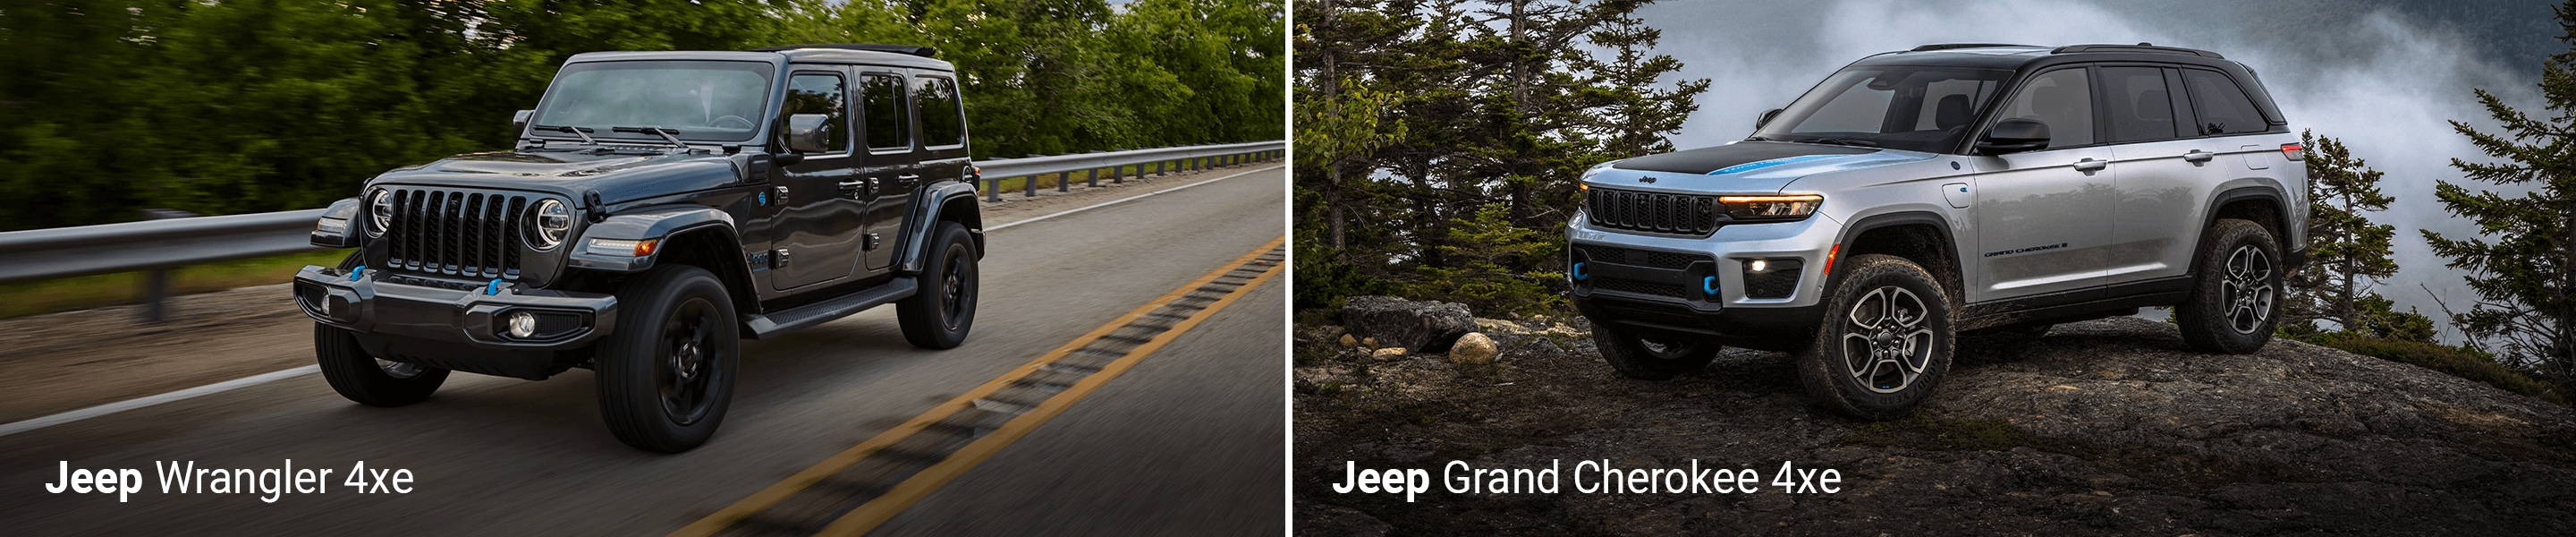 Jeep Wrangler 4xe vs Jeep Grand Cherokee 4xe